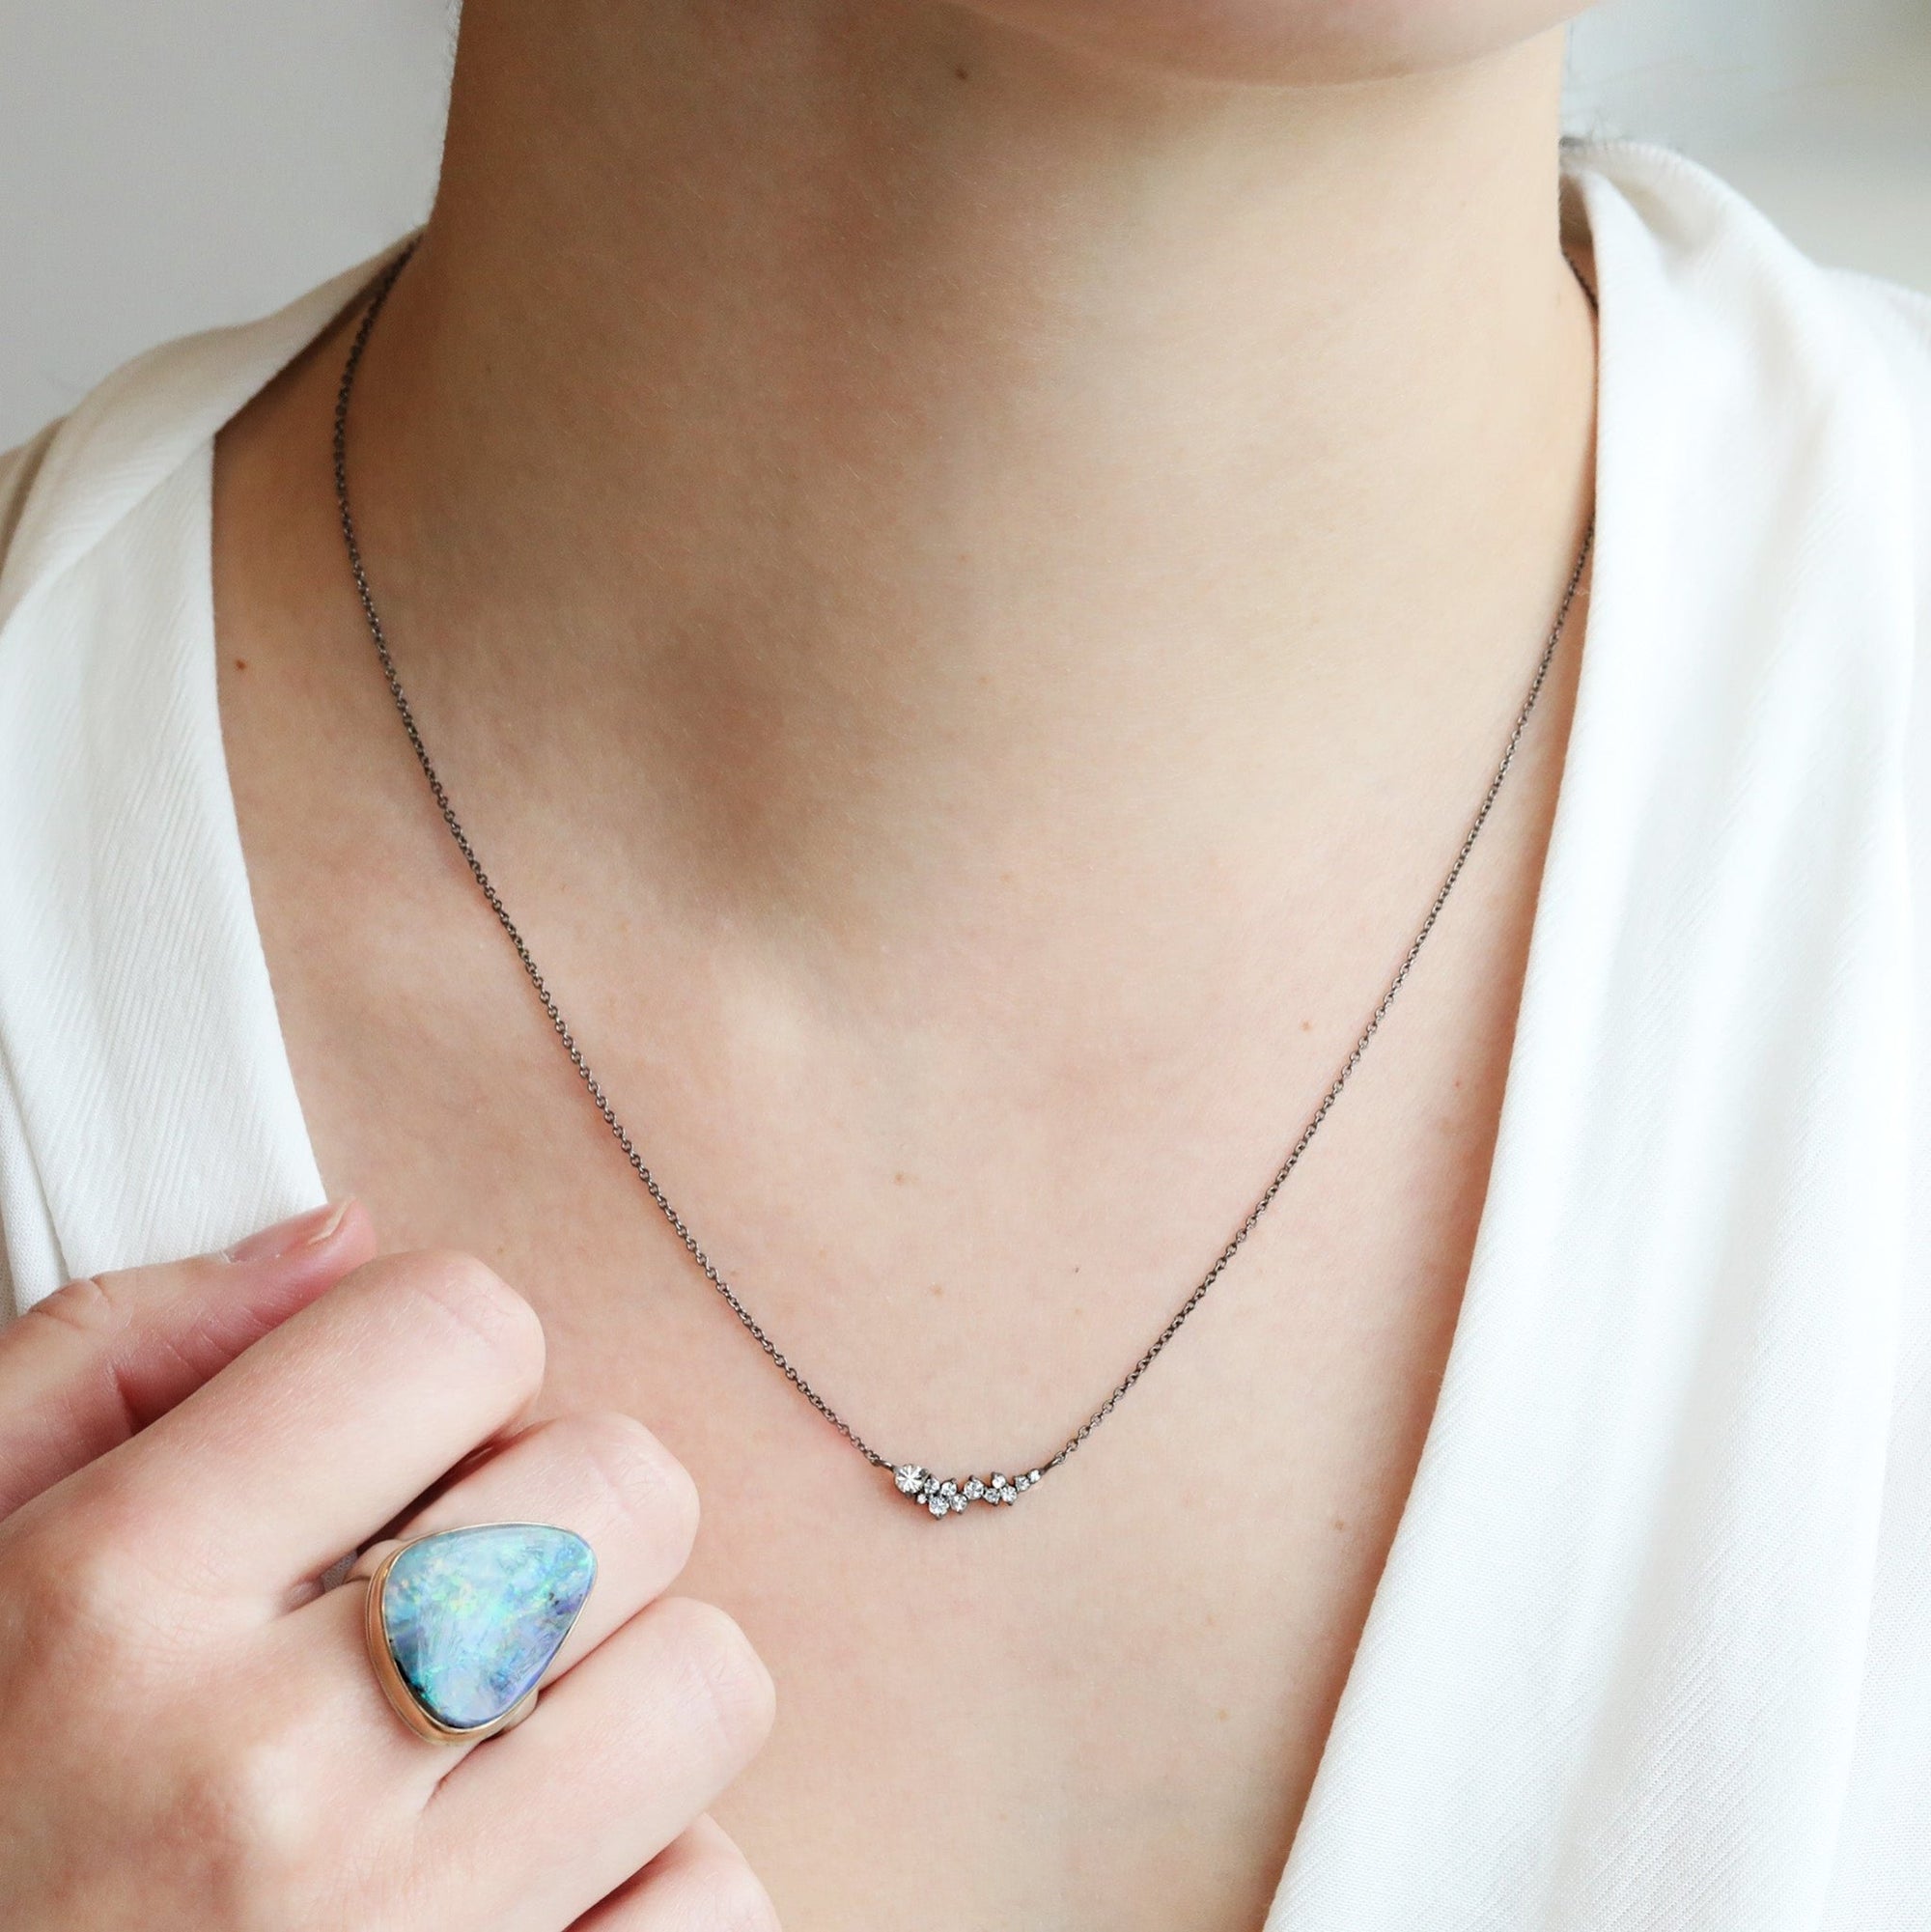 Vertical Asymmetrical Boulder Opal Ring - Peridot Fine Jewelry - Jamie Joseph